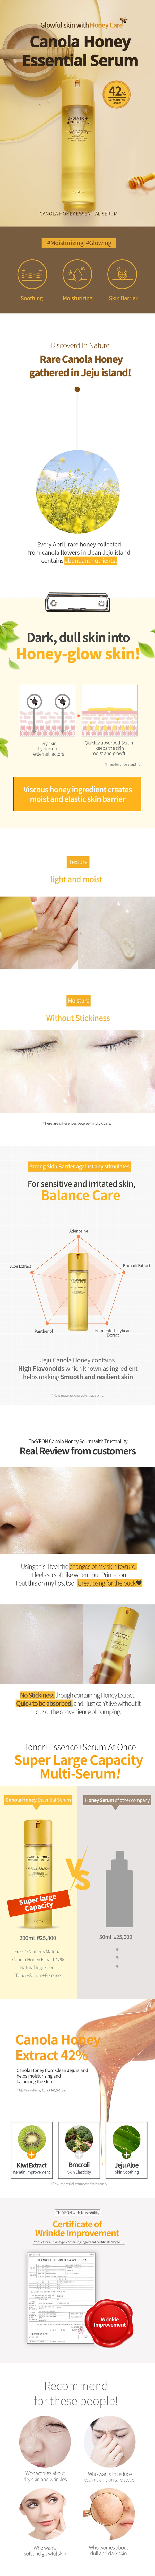 The Yeon Canola Honey Essential Serum